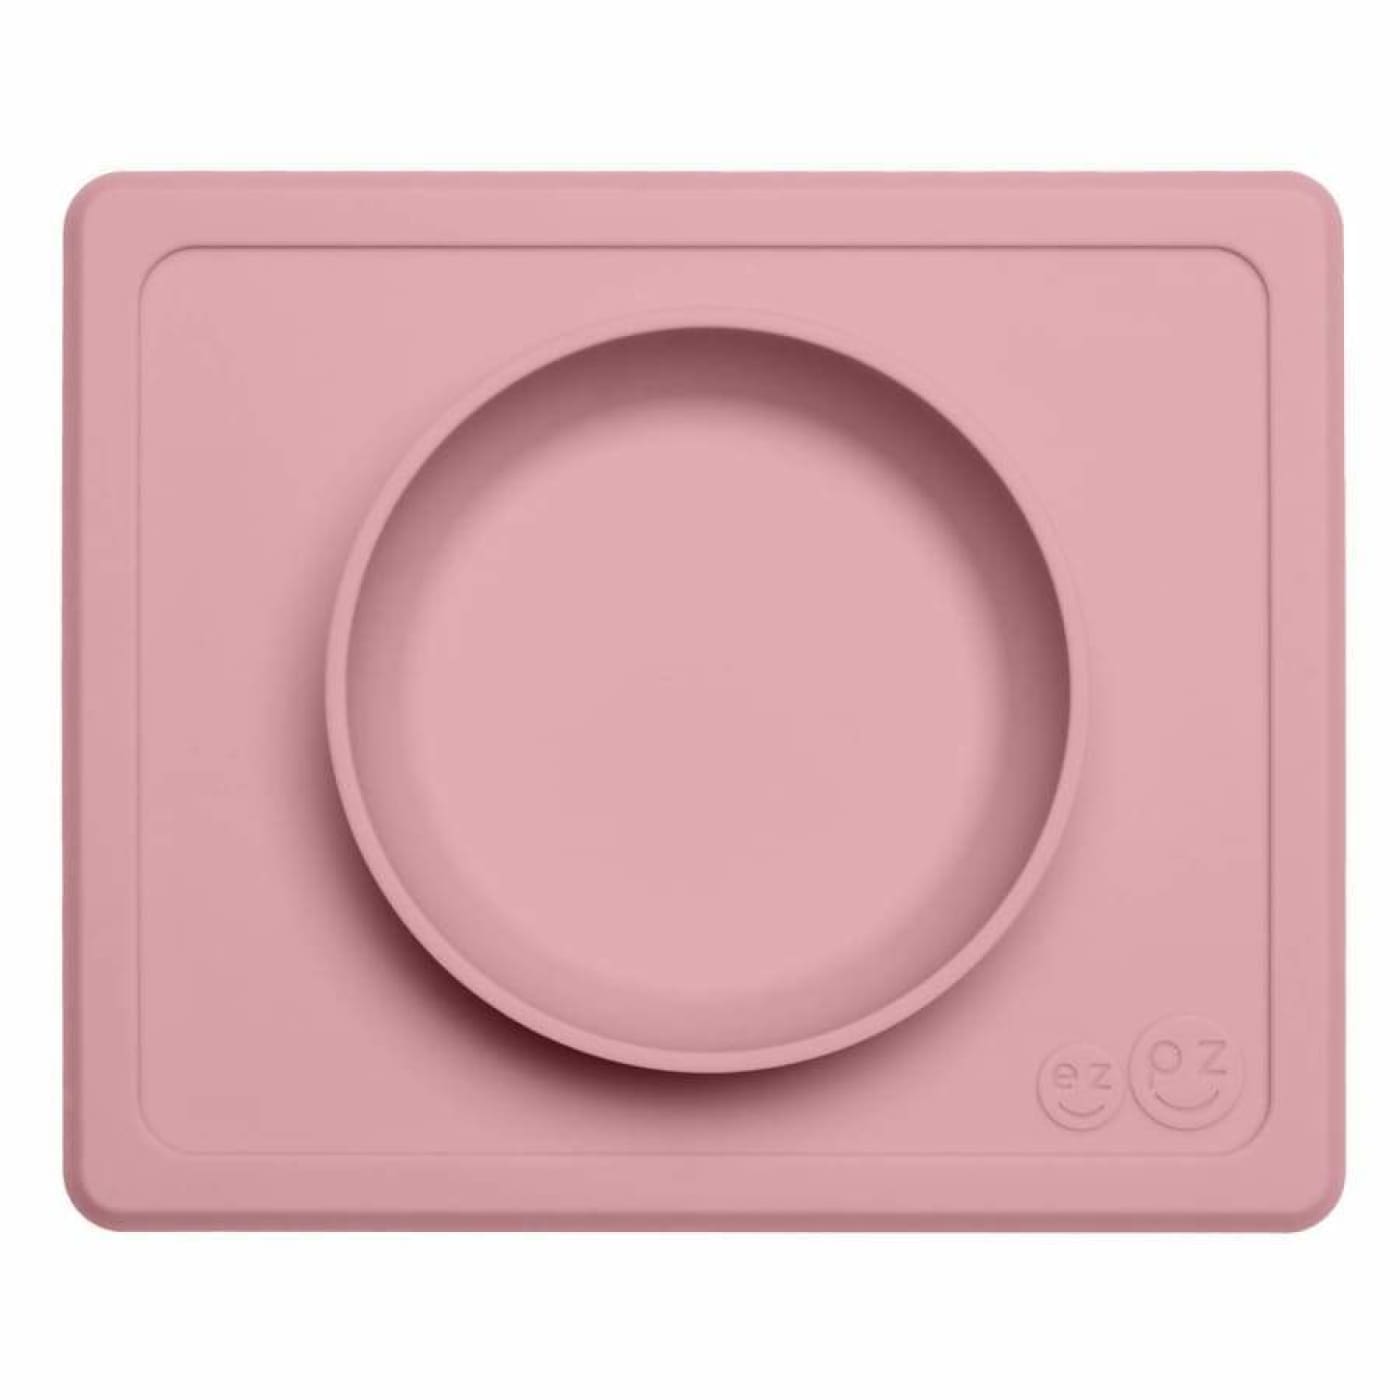 EZPZ Mini Bowl - Blush - Blush - NURSING & FEEDING - CUTLERY/PLATES/BOWLS/TOYS